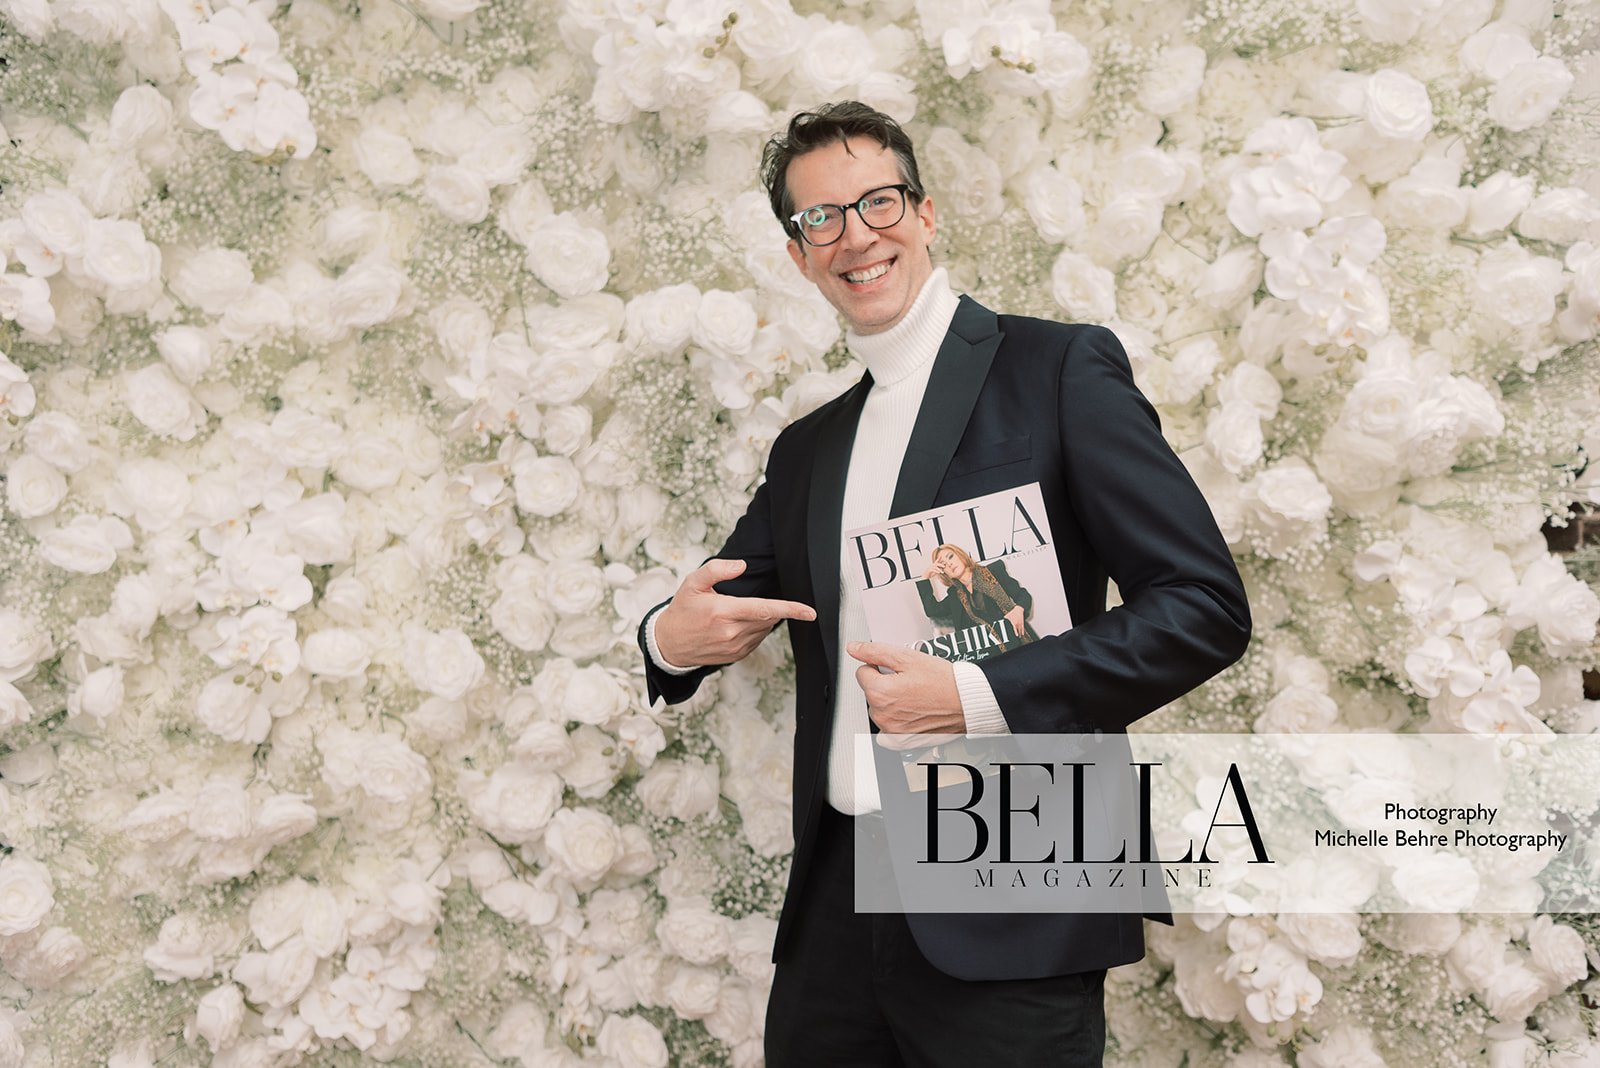 Michelle-Behre-Photography-BELLA-Magazine-Wedding-Event-La-Pulperia-New-York-15.jpg